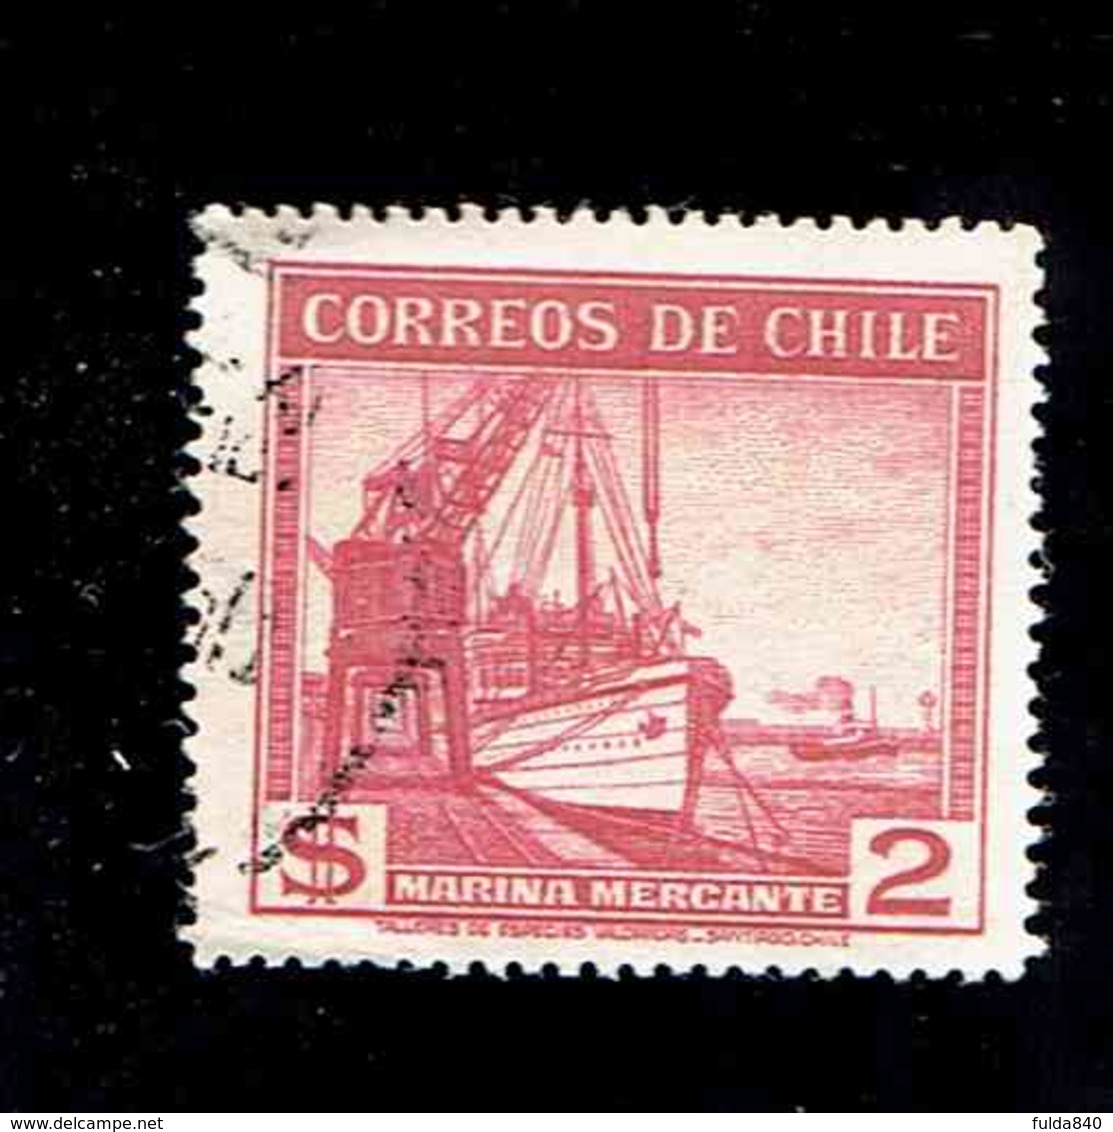 CHILI.(Y&T)   1938-40 - N°176  *Navire Marchand*  2p.  Obl (décentré) - Chili